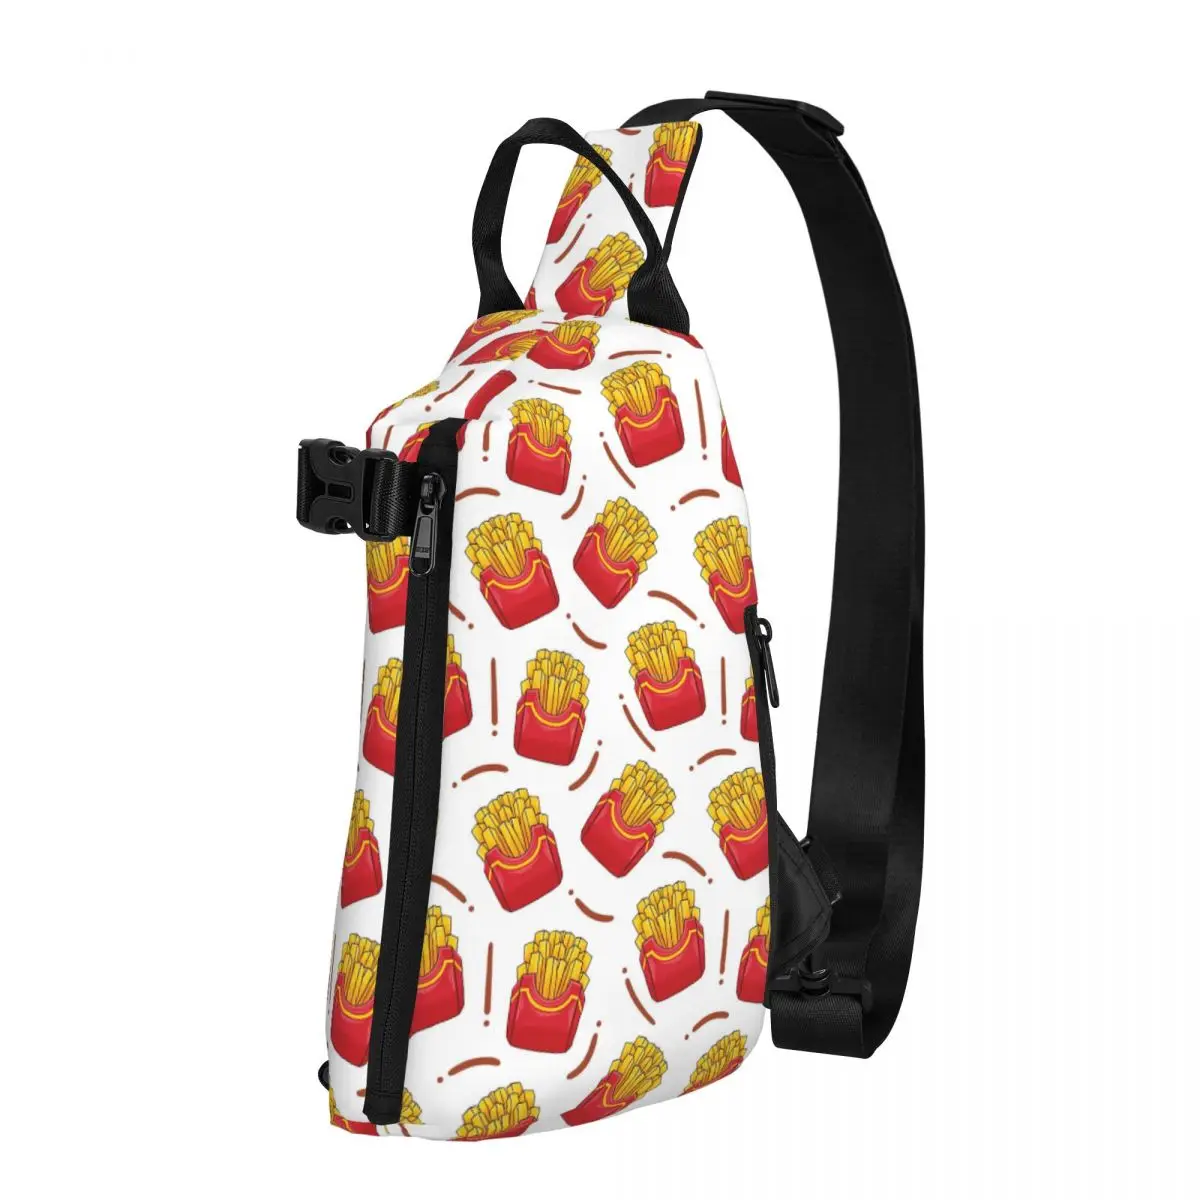 French Fries Pattern Gifts Shoulder Bags Chest Cross Chest Bag Diagonally Casual Messenger Bag Travel Handbag